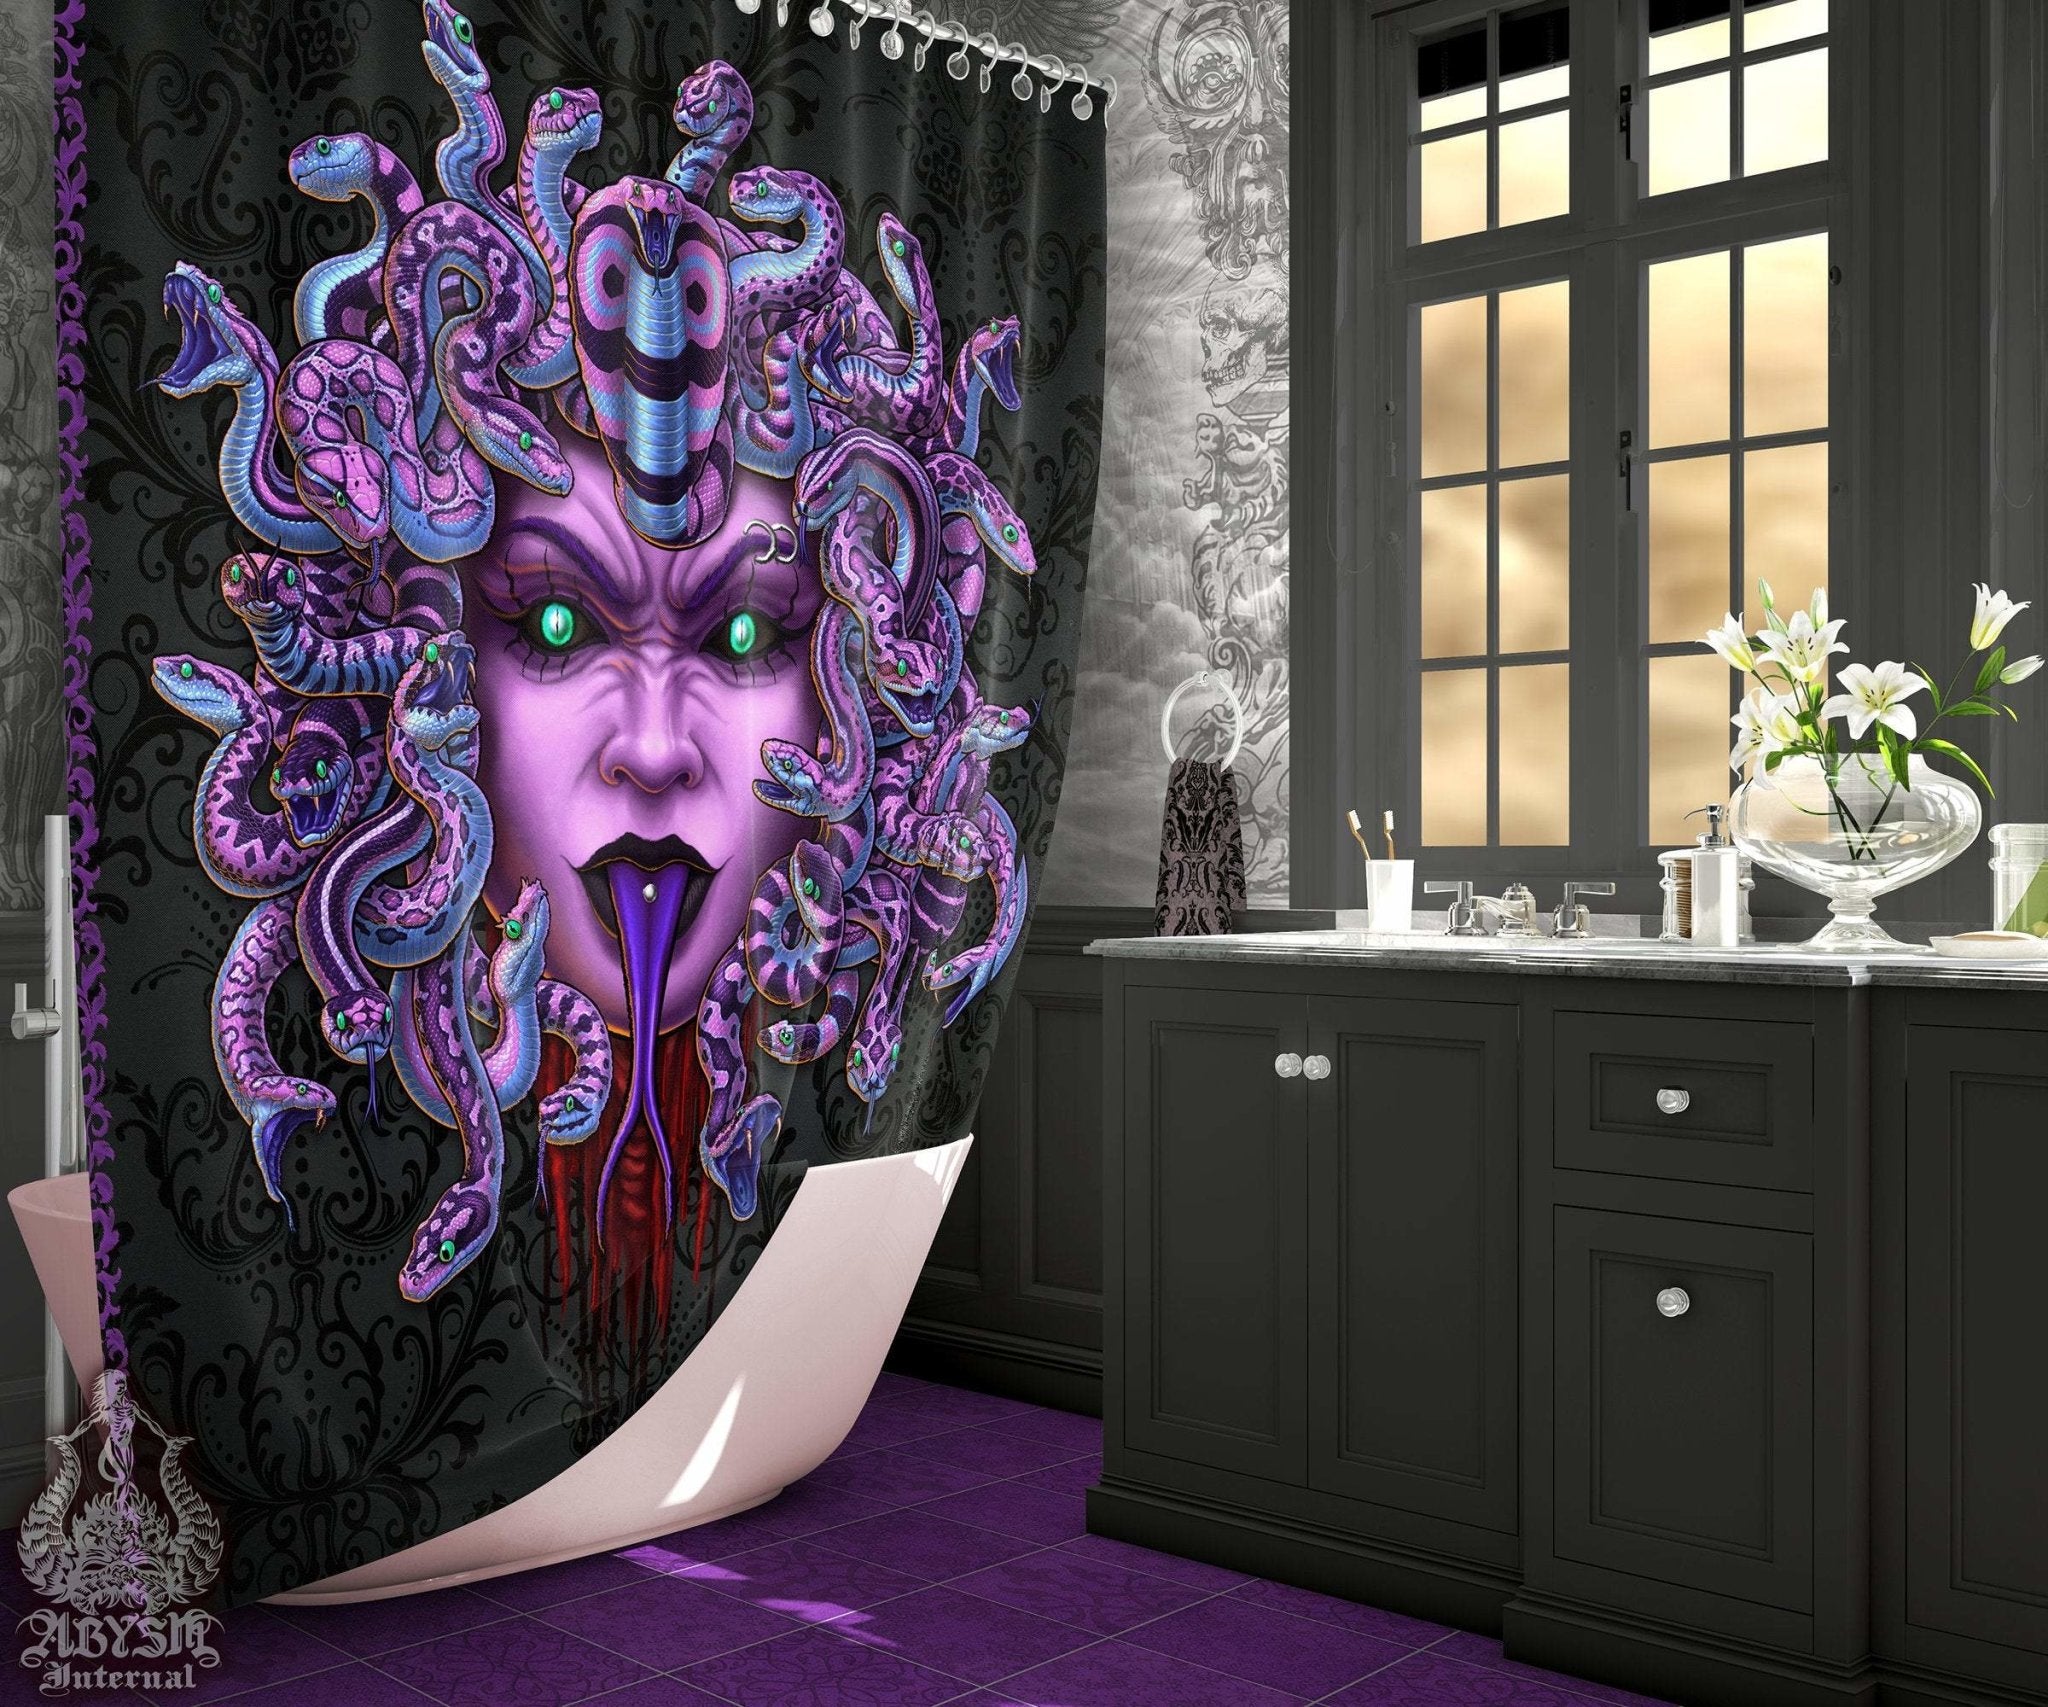 Pastel Goth Shower Curtain, Medusa, Gothic Bathroom Decor - Mocking, Purple Snakes - Abysm Internal